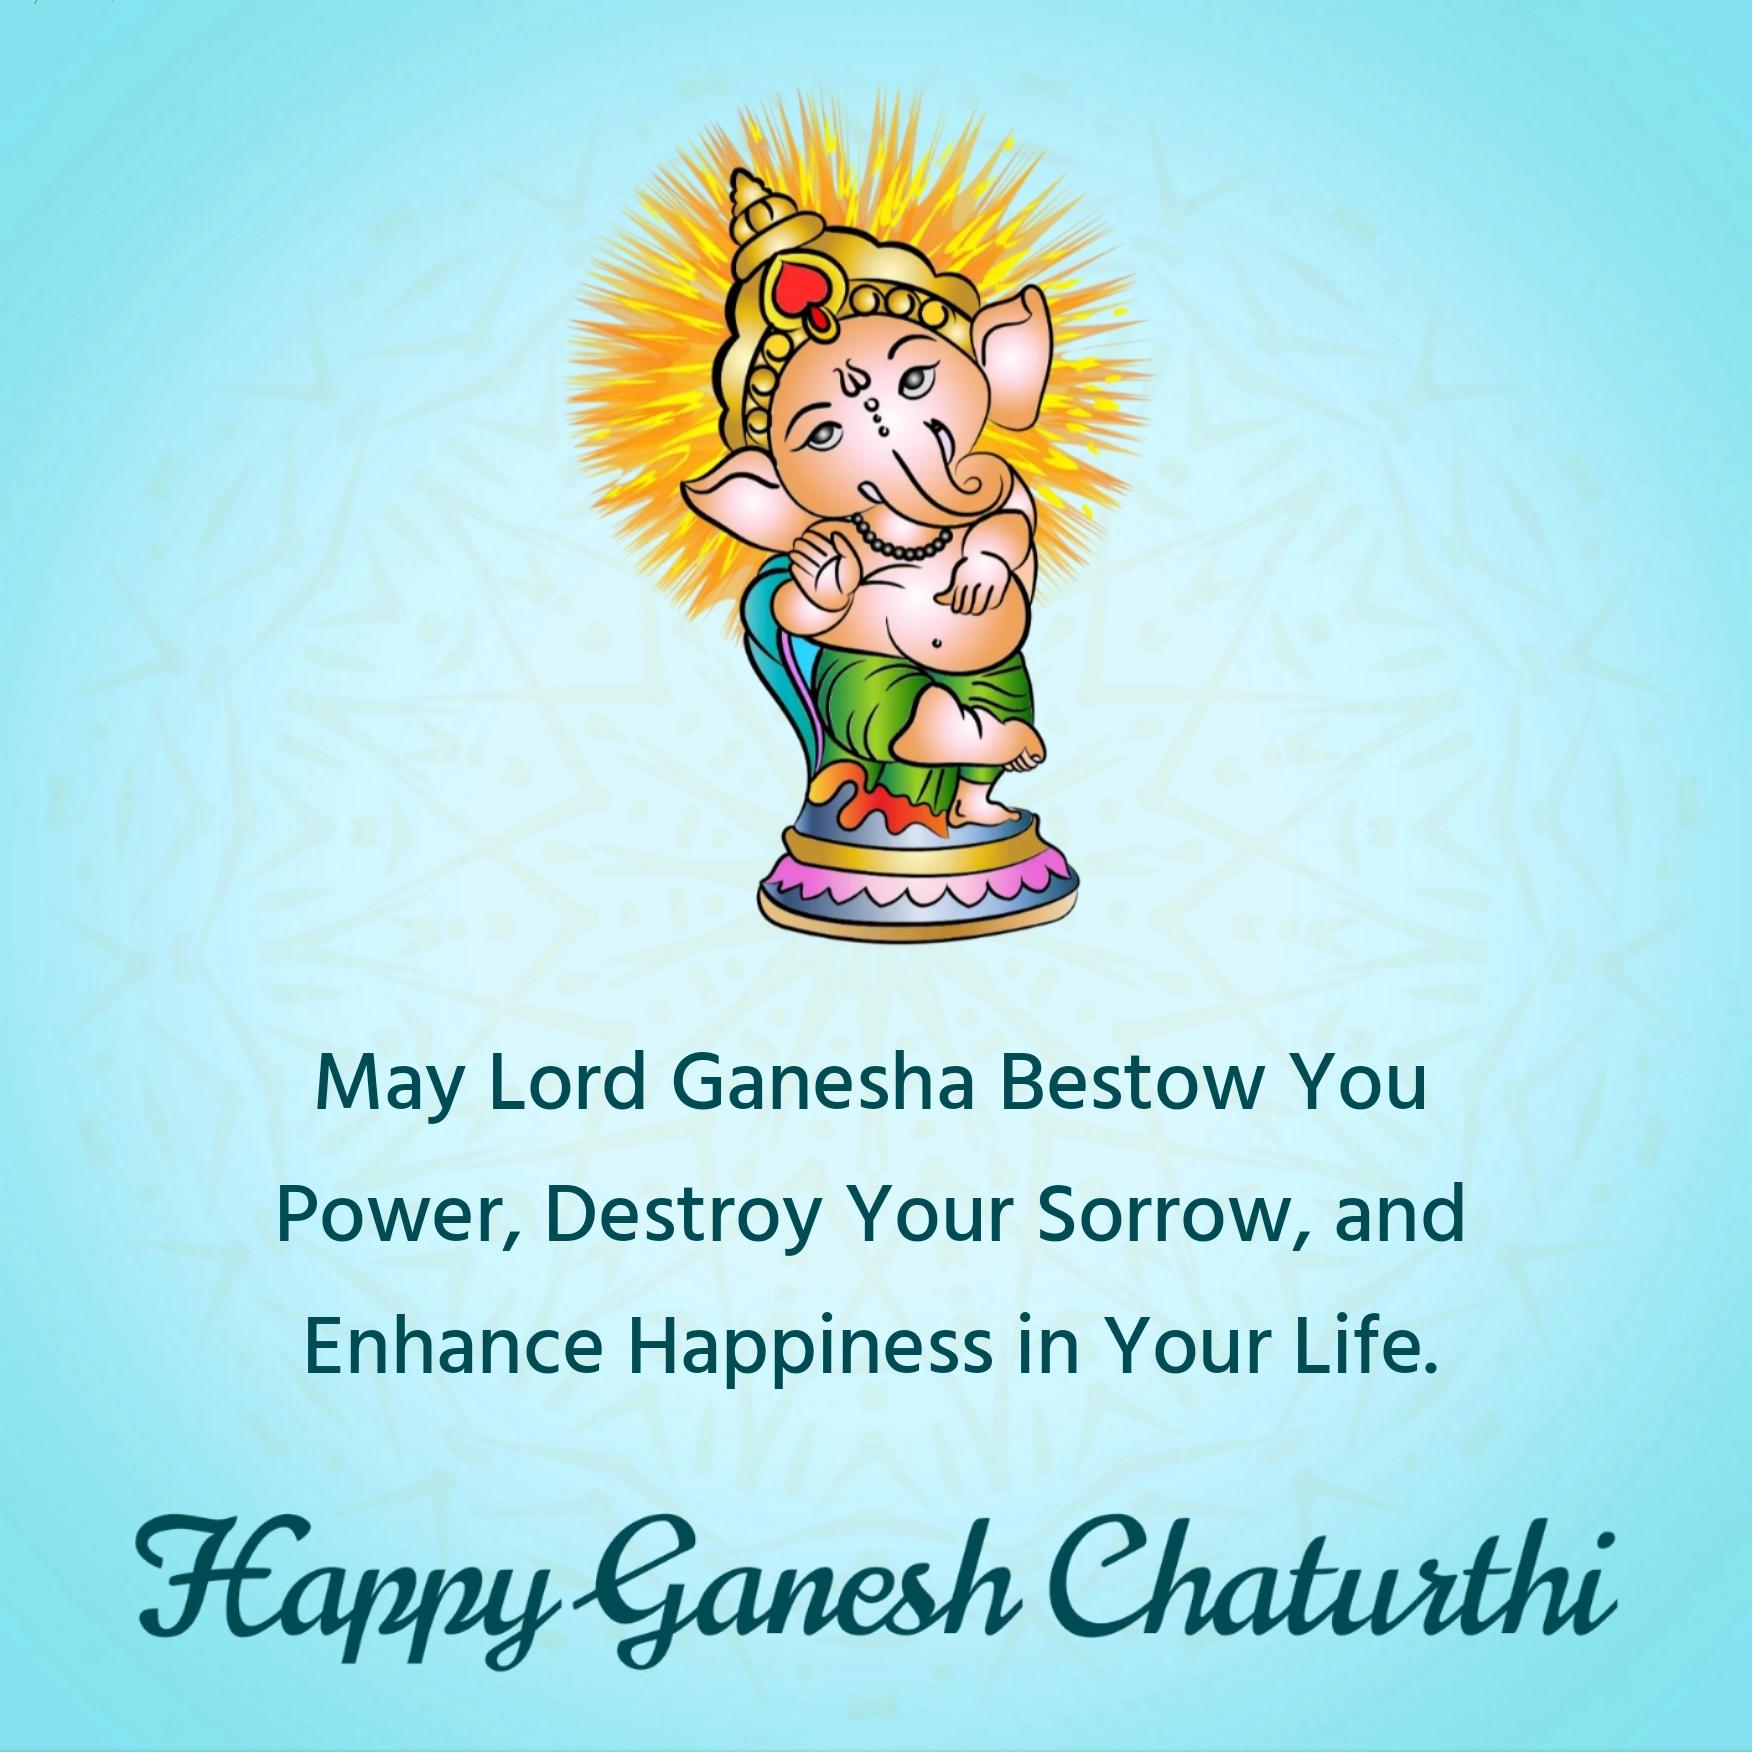 May Lord Ganesha Bestow You Power